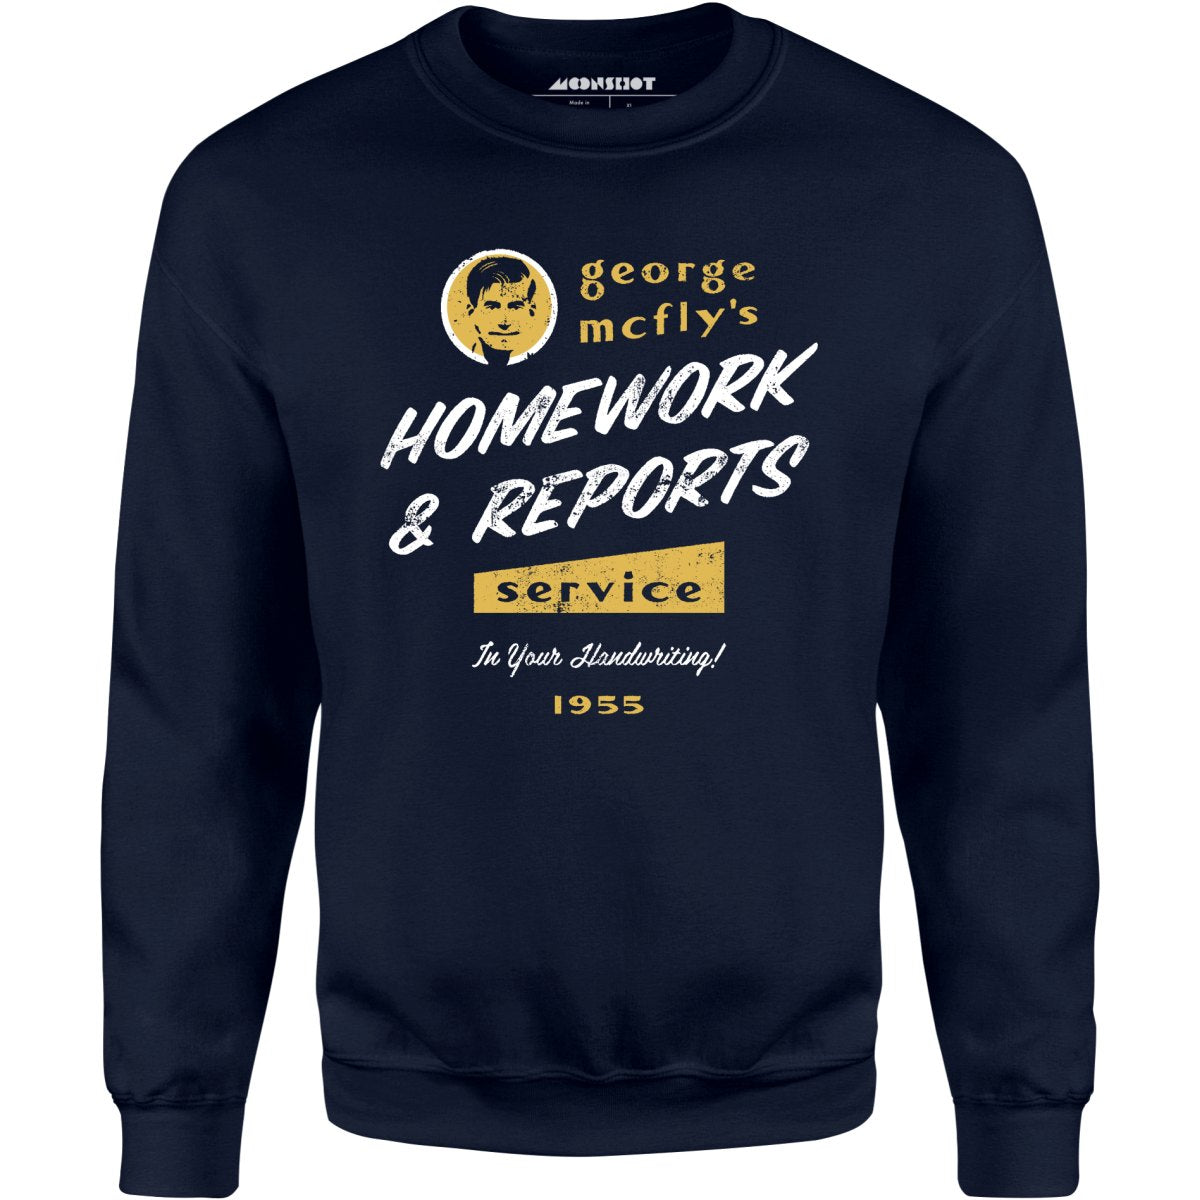 George McFly's Homework & Reports Service - Unisex Sweatshirt